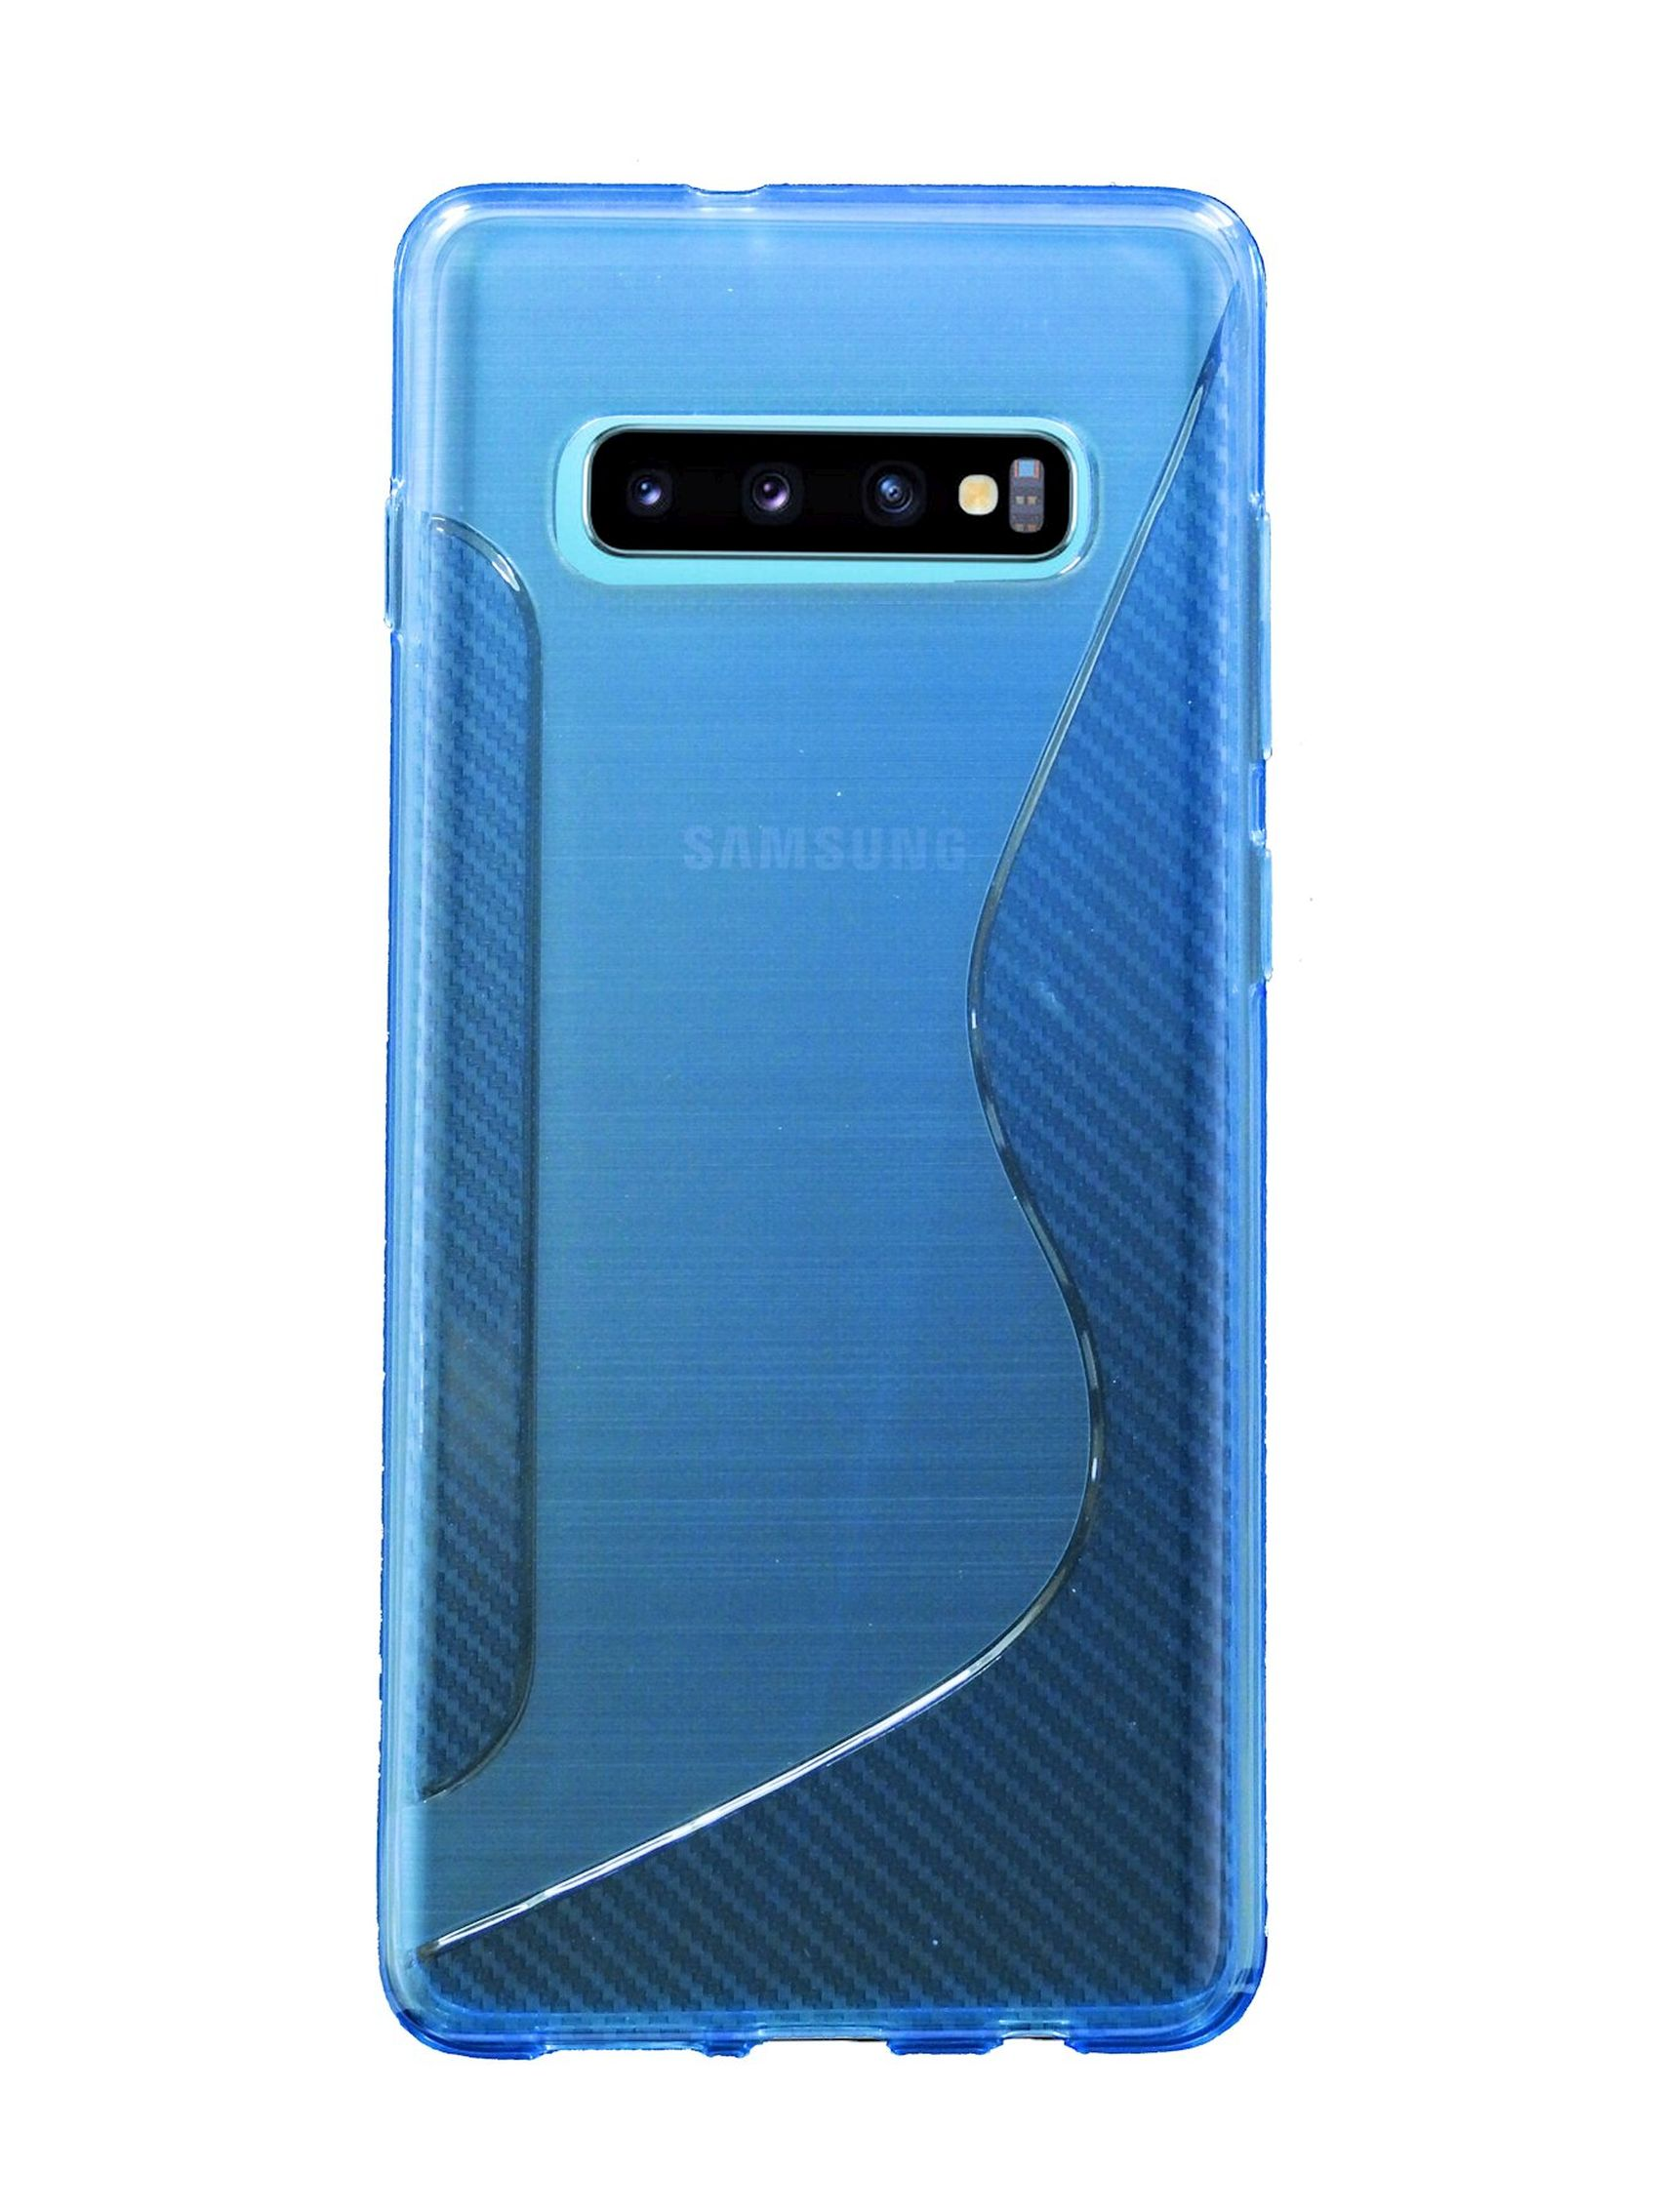 COFI S-Line Cover, Samsung, S10 Plus, Blau Bumper, Galaxy